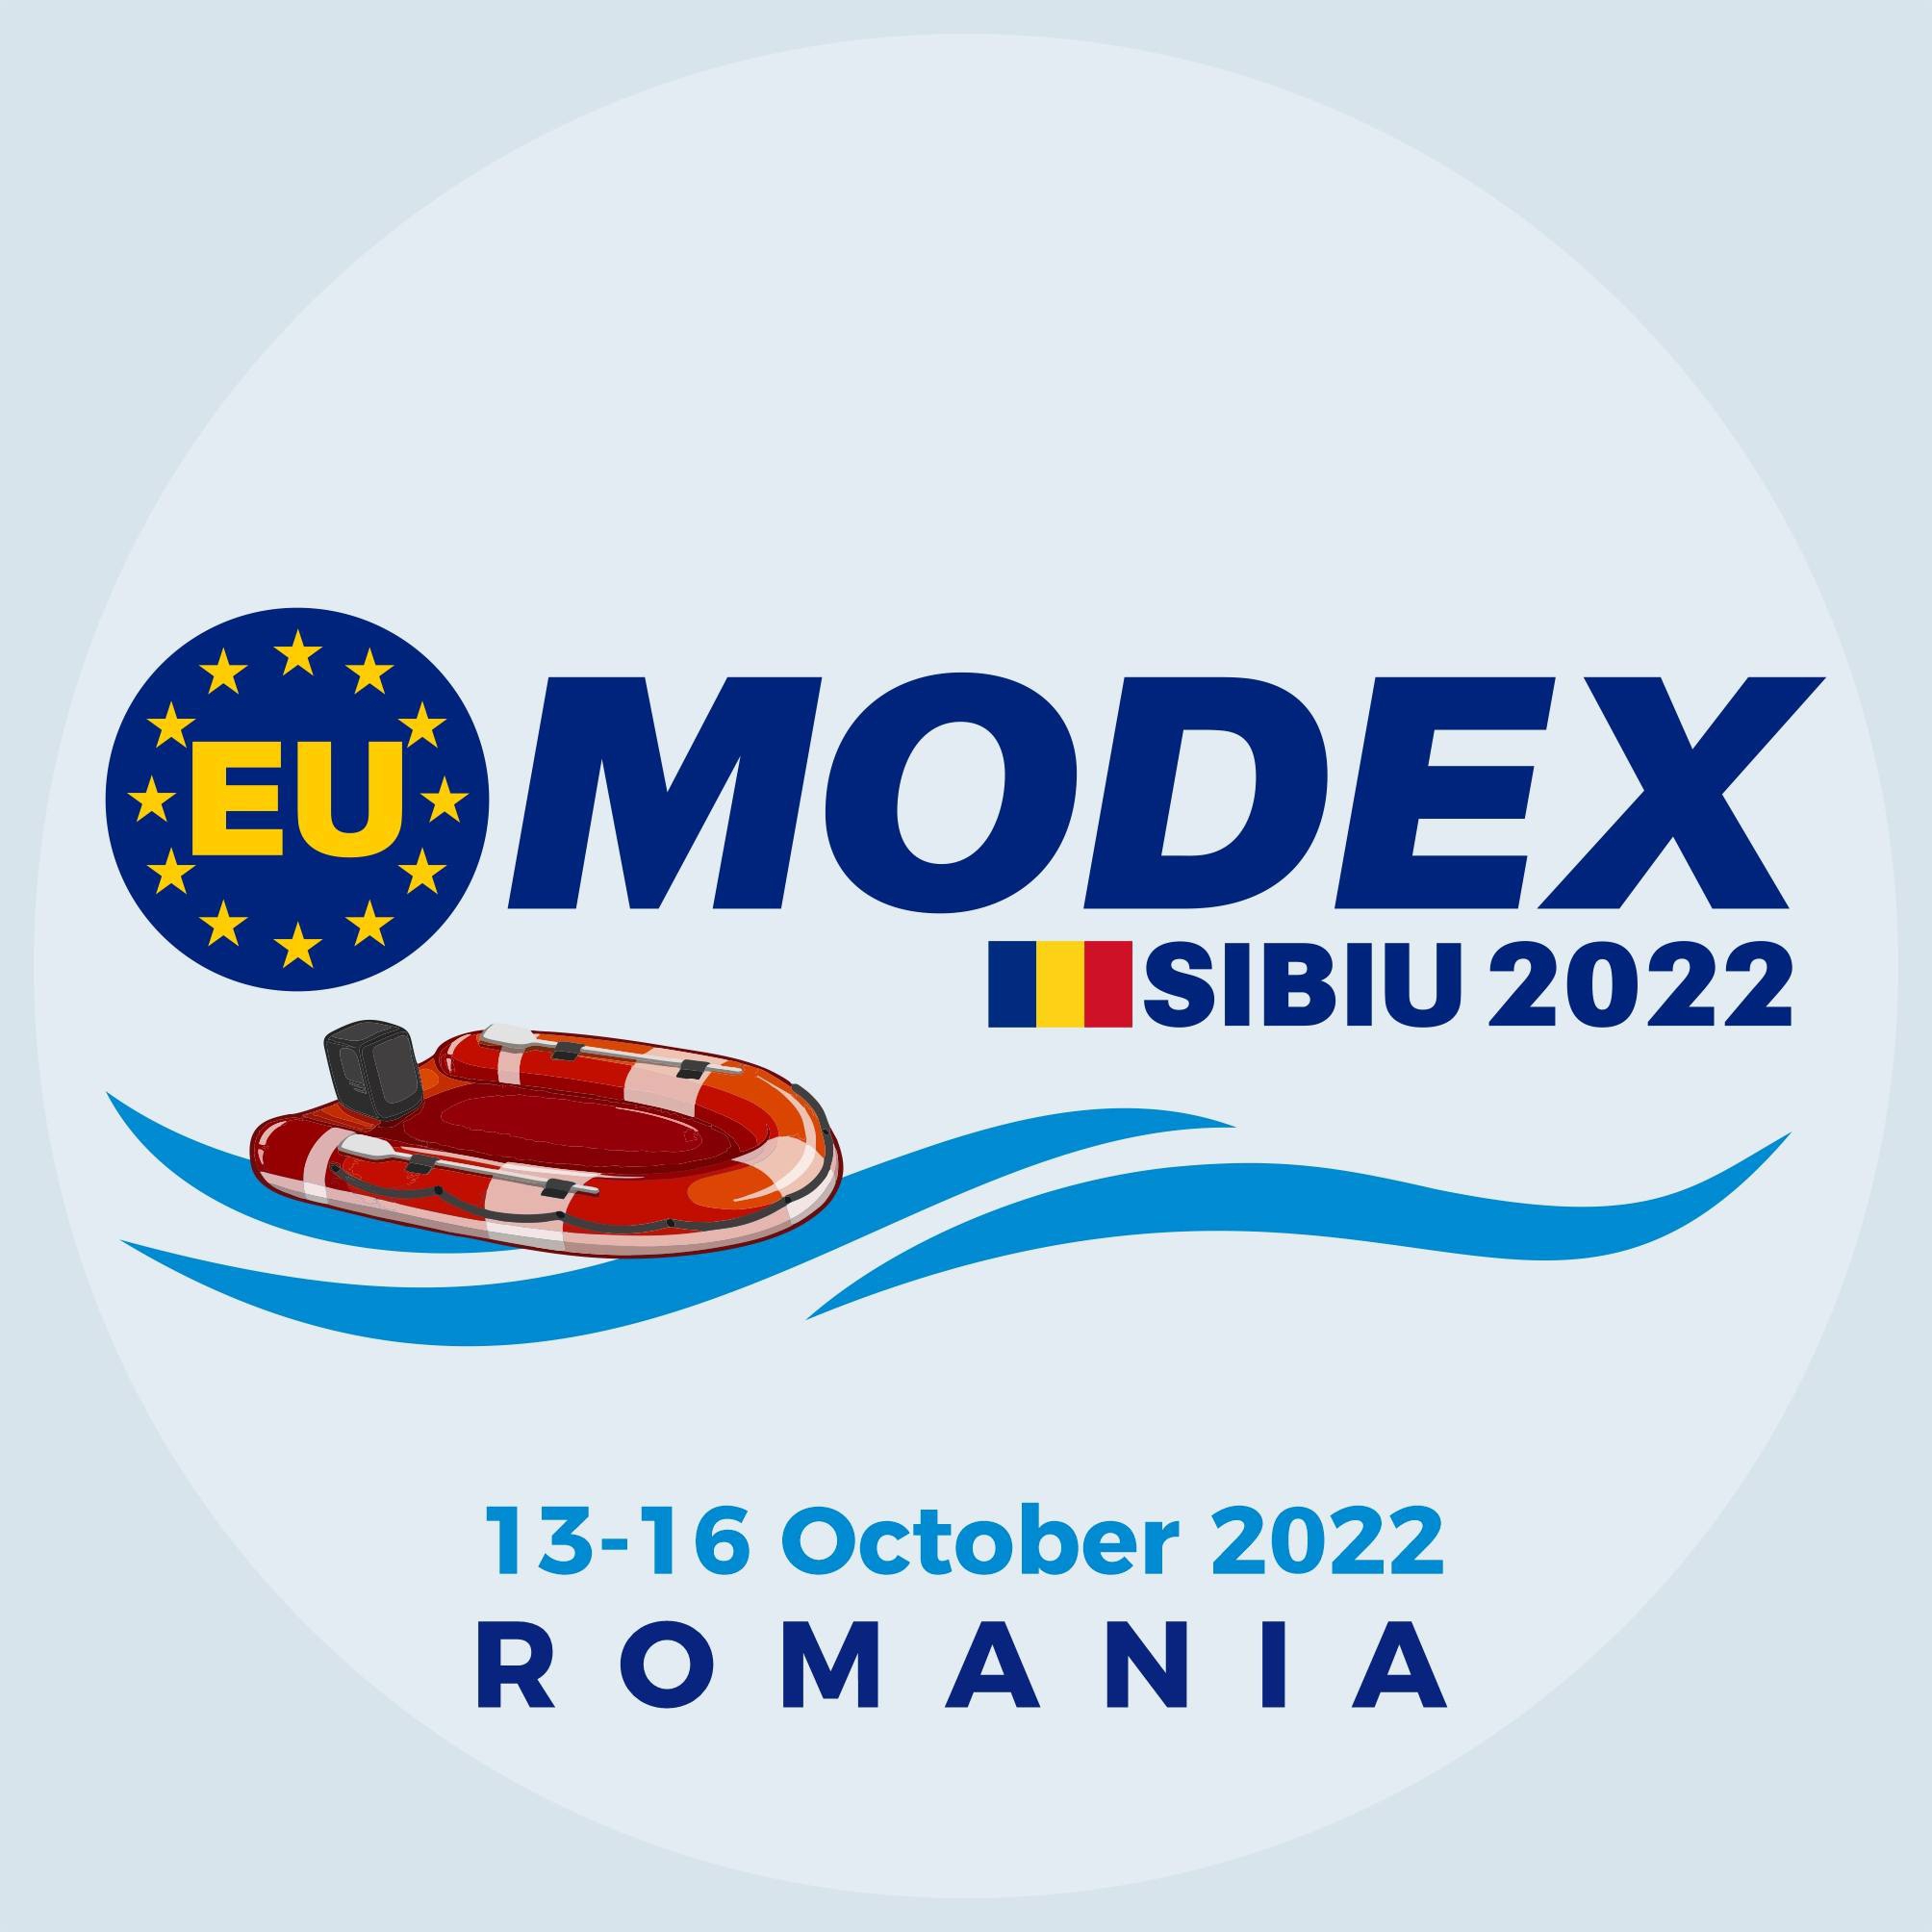 EU MODEX SIBIU 2022 - Abfahrt und Ankunft